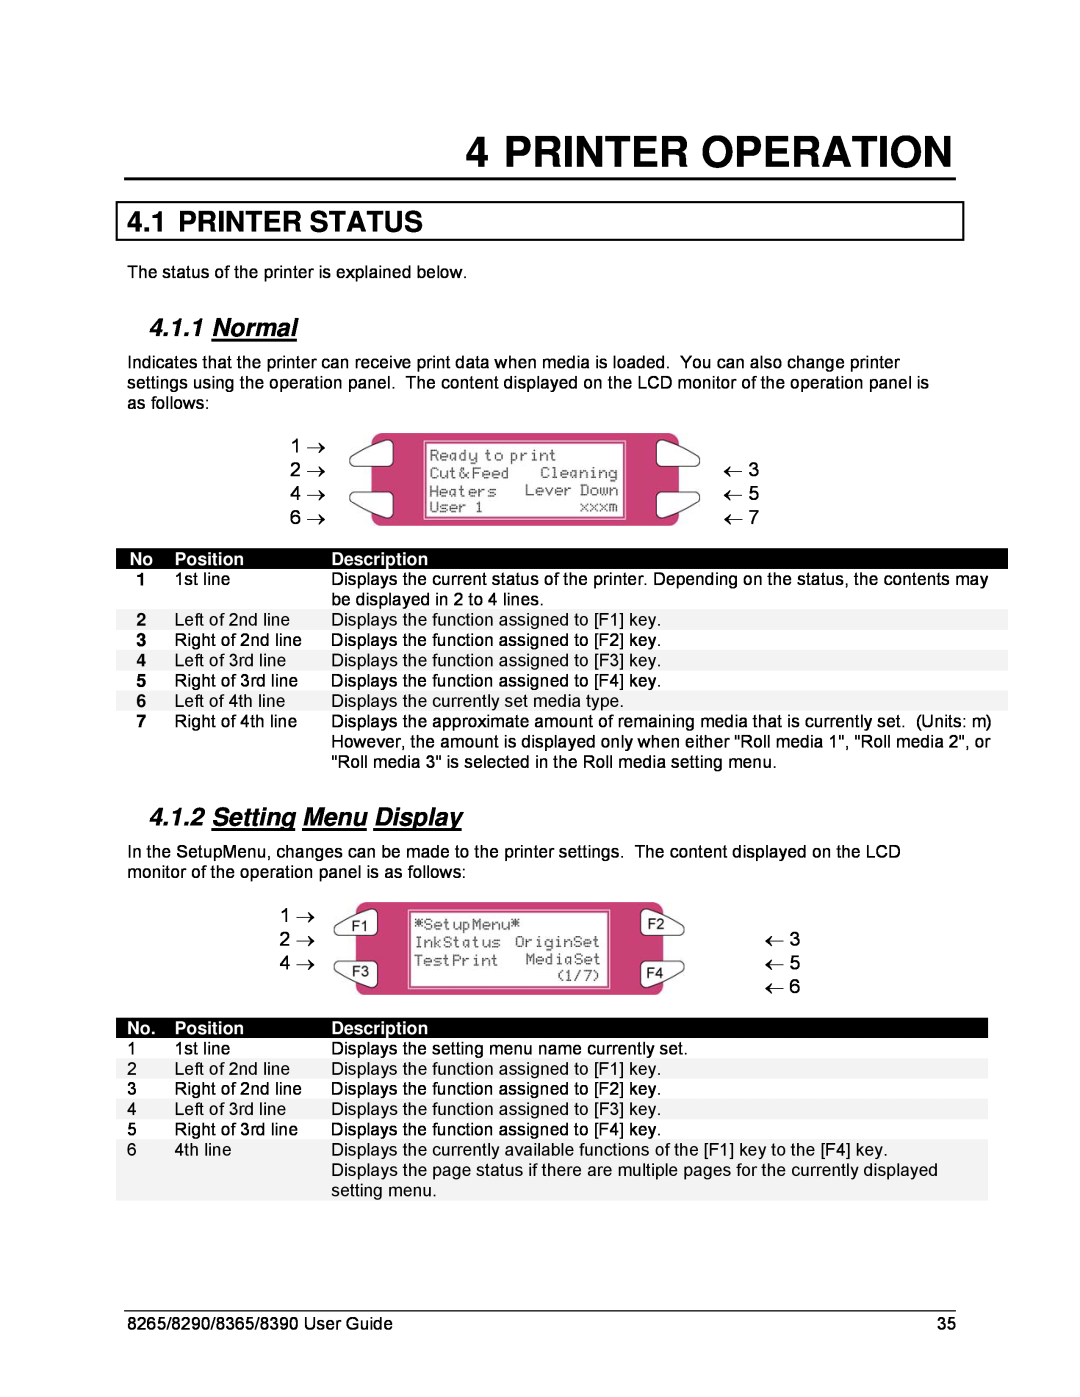 Xerox 8365 Printer Operation, Printer Status, Normal, Setting Menu Display, 1 →, 2 →, 4 →, 6 →, No Position, Description 